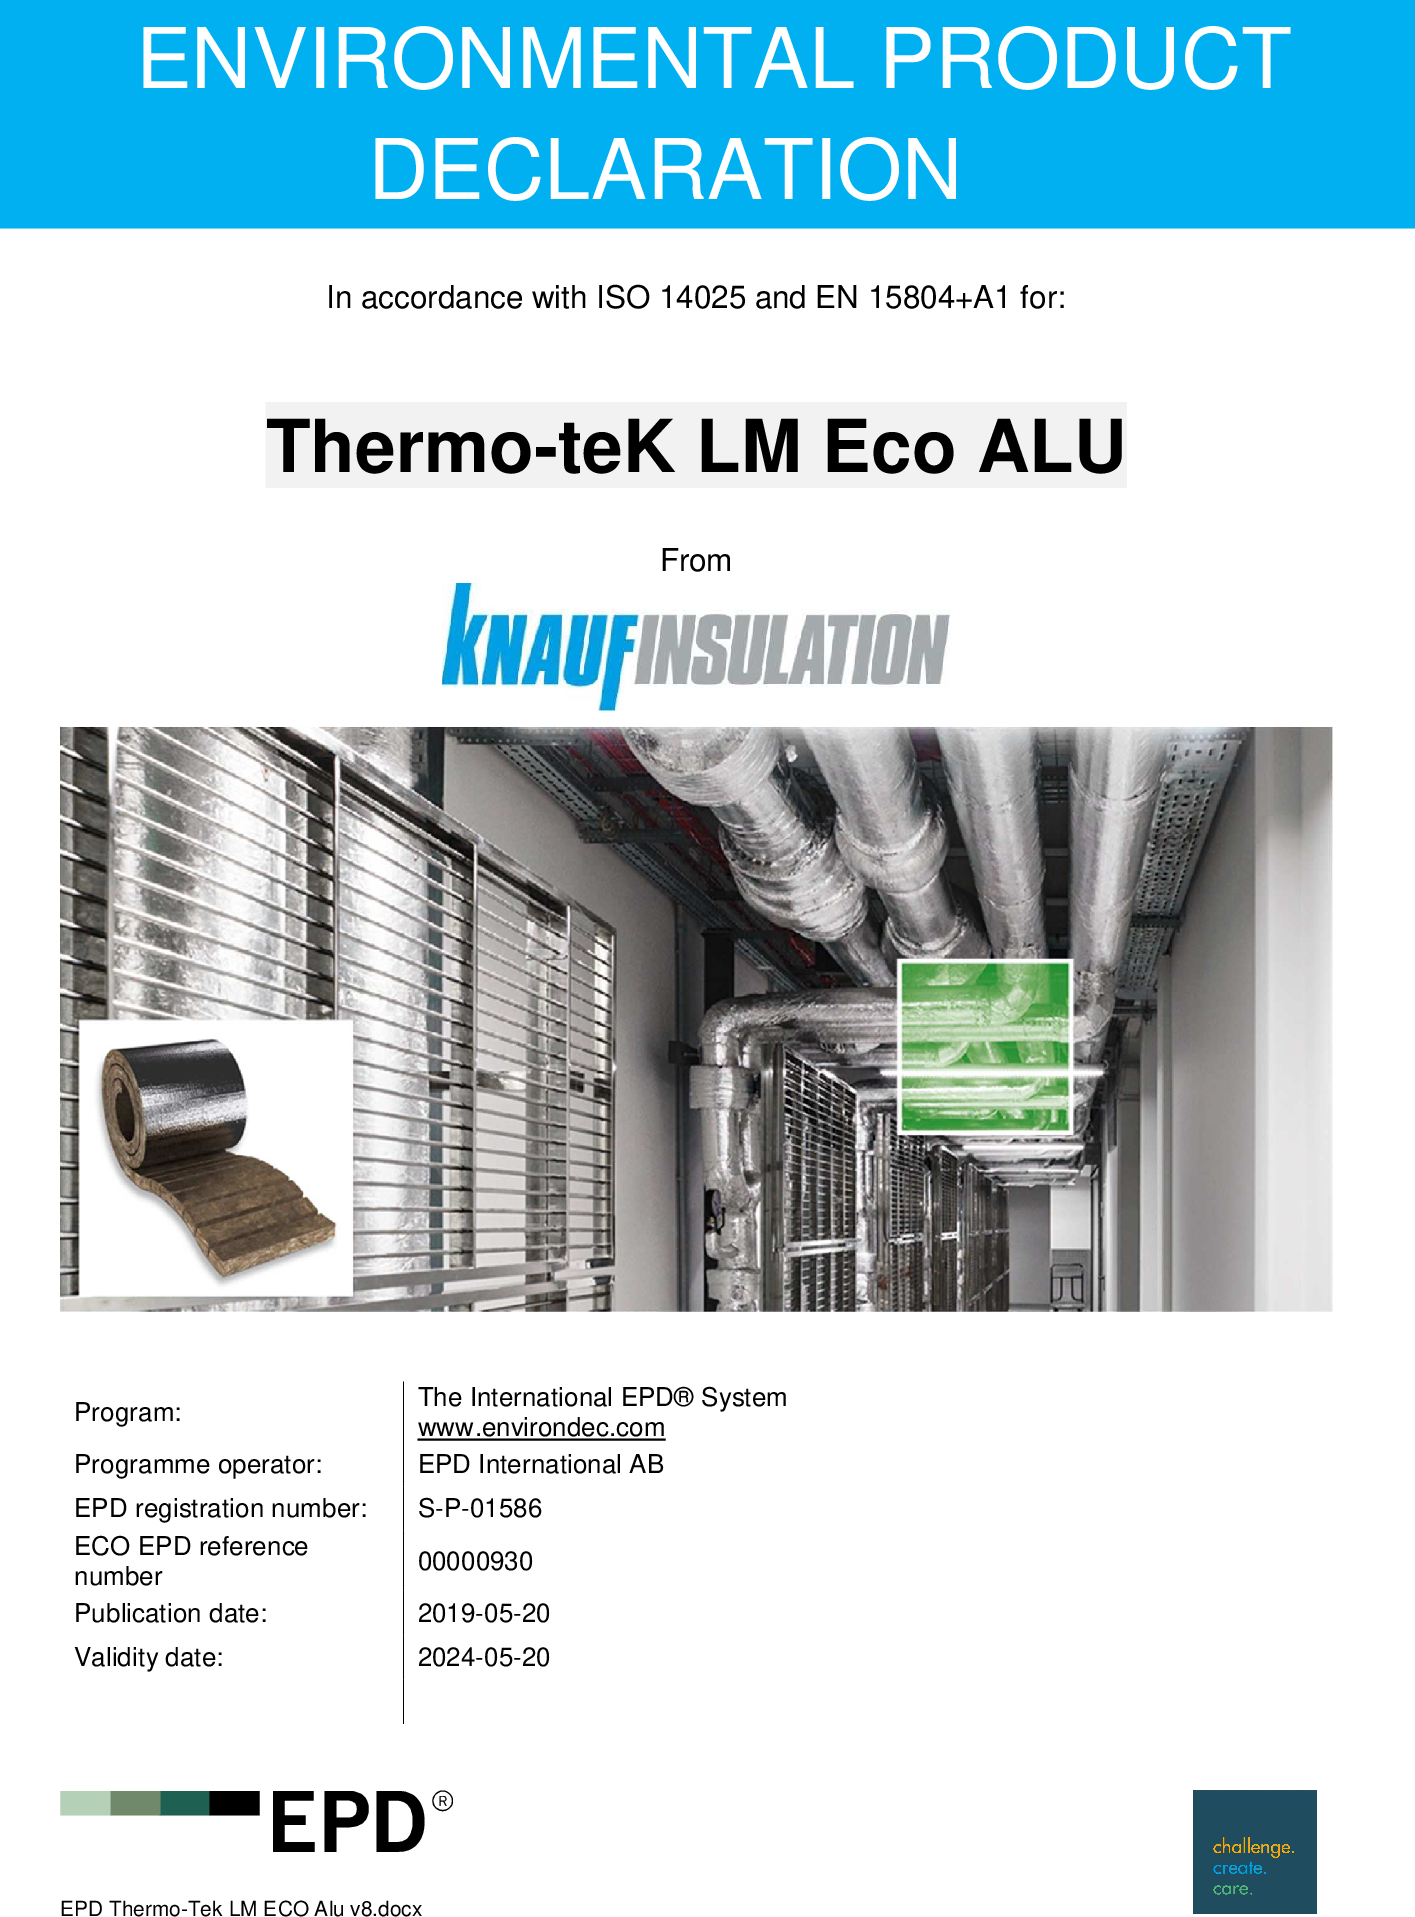 EPD Thermo-teK LM Eco Alu